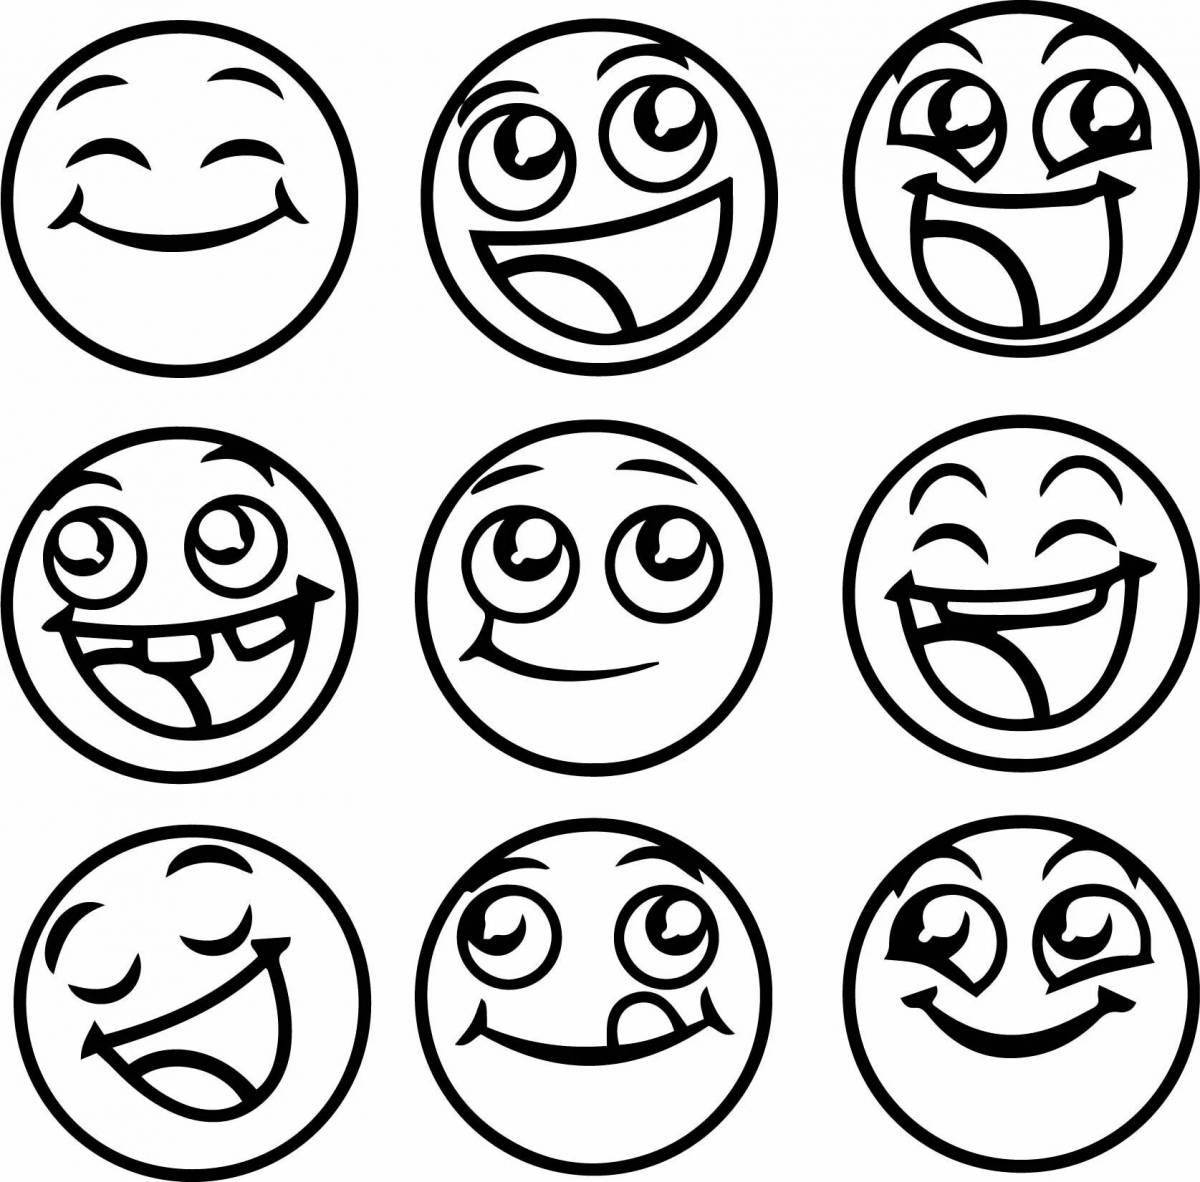 Wonderful emoji emoji coloring pages